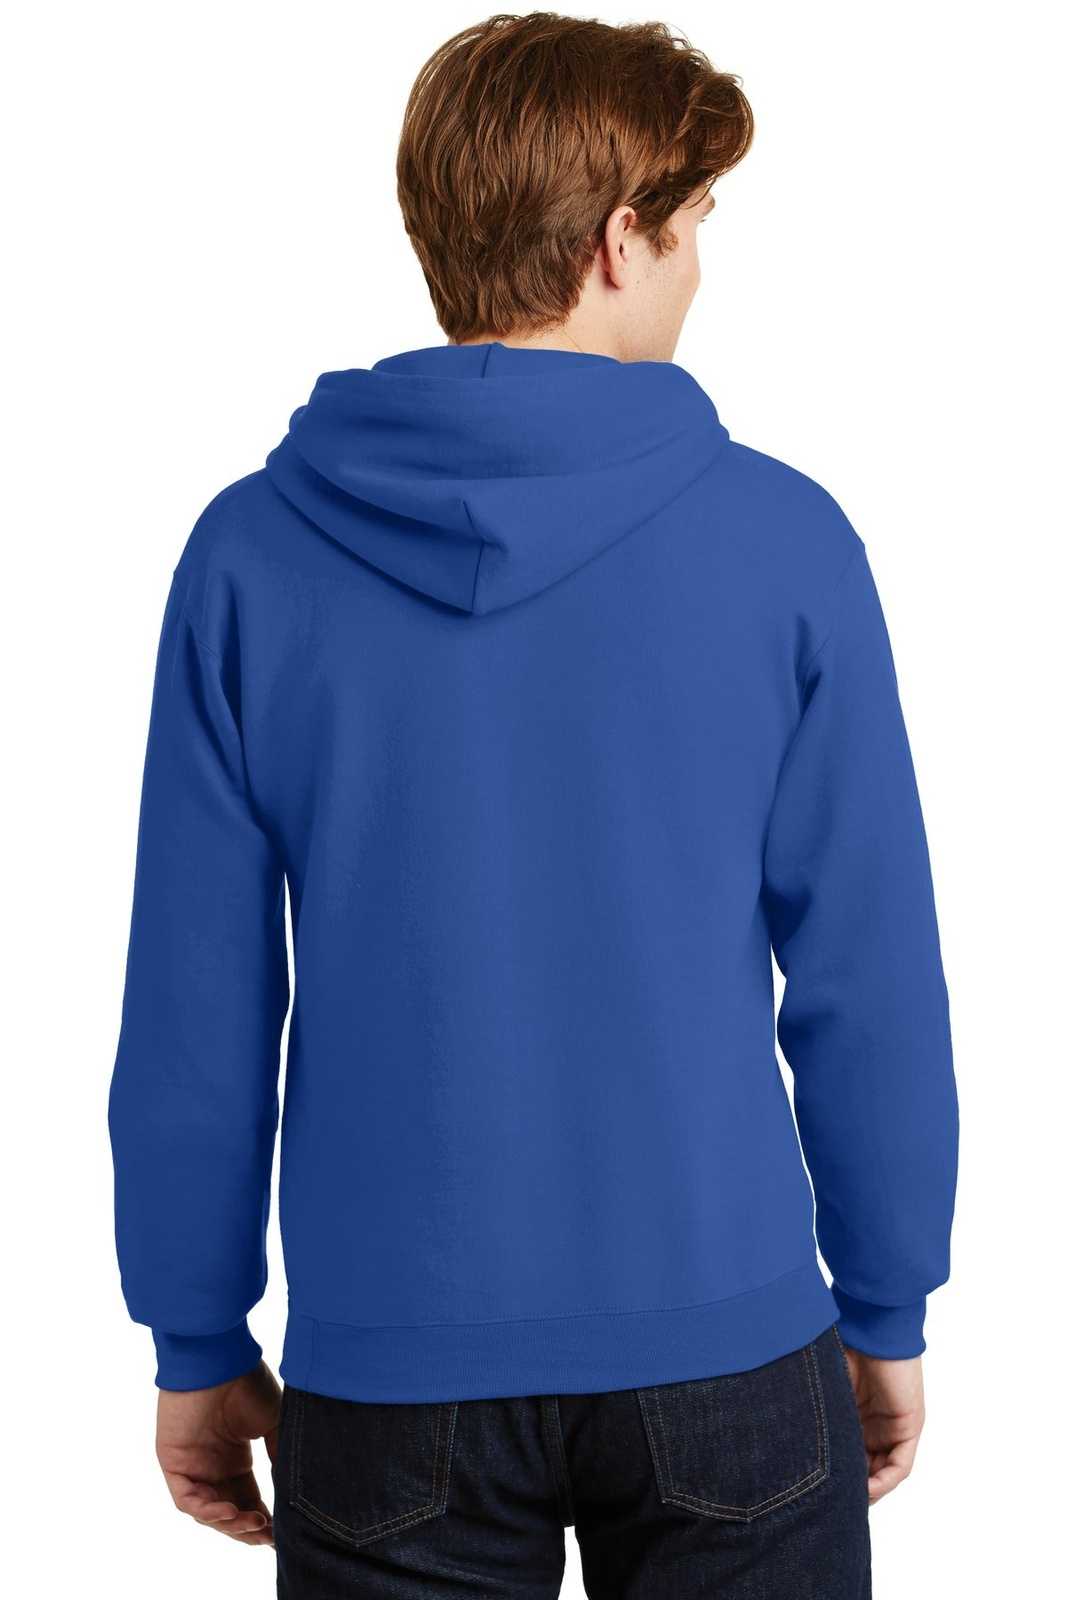 Jerzees 4997M Super Sweats Nublend Pullover Hooded Sweatshirt - Royal - HIT a Double